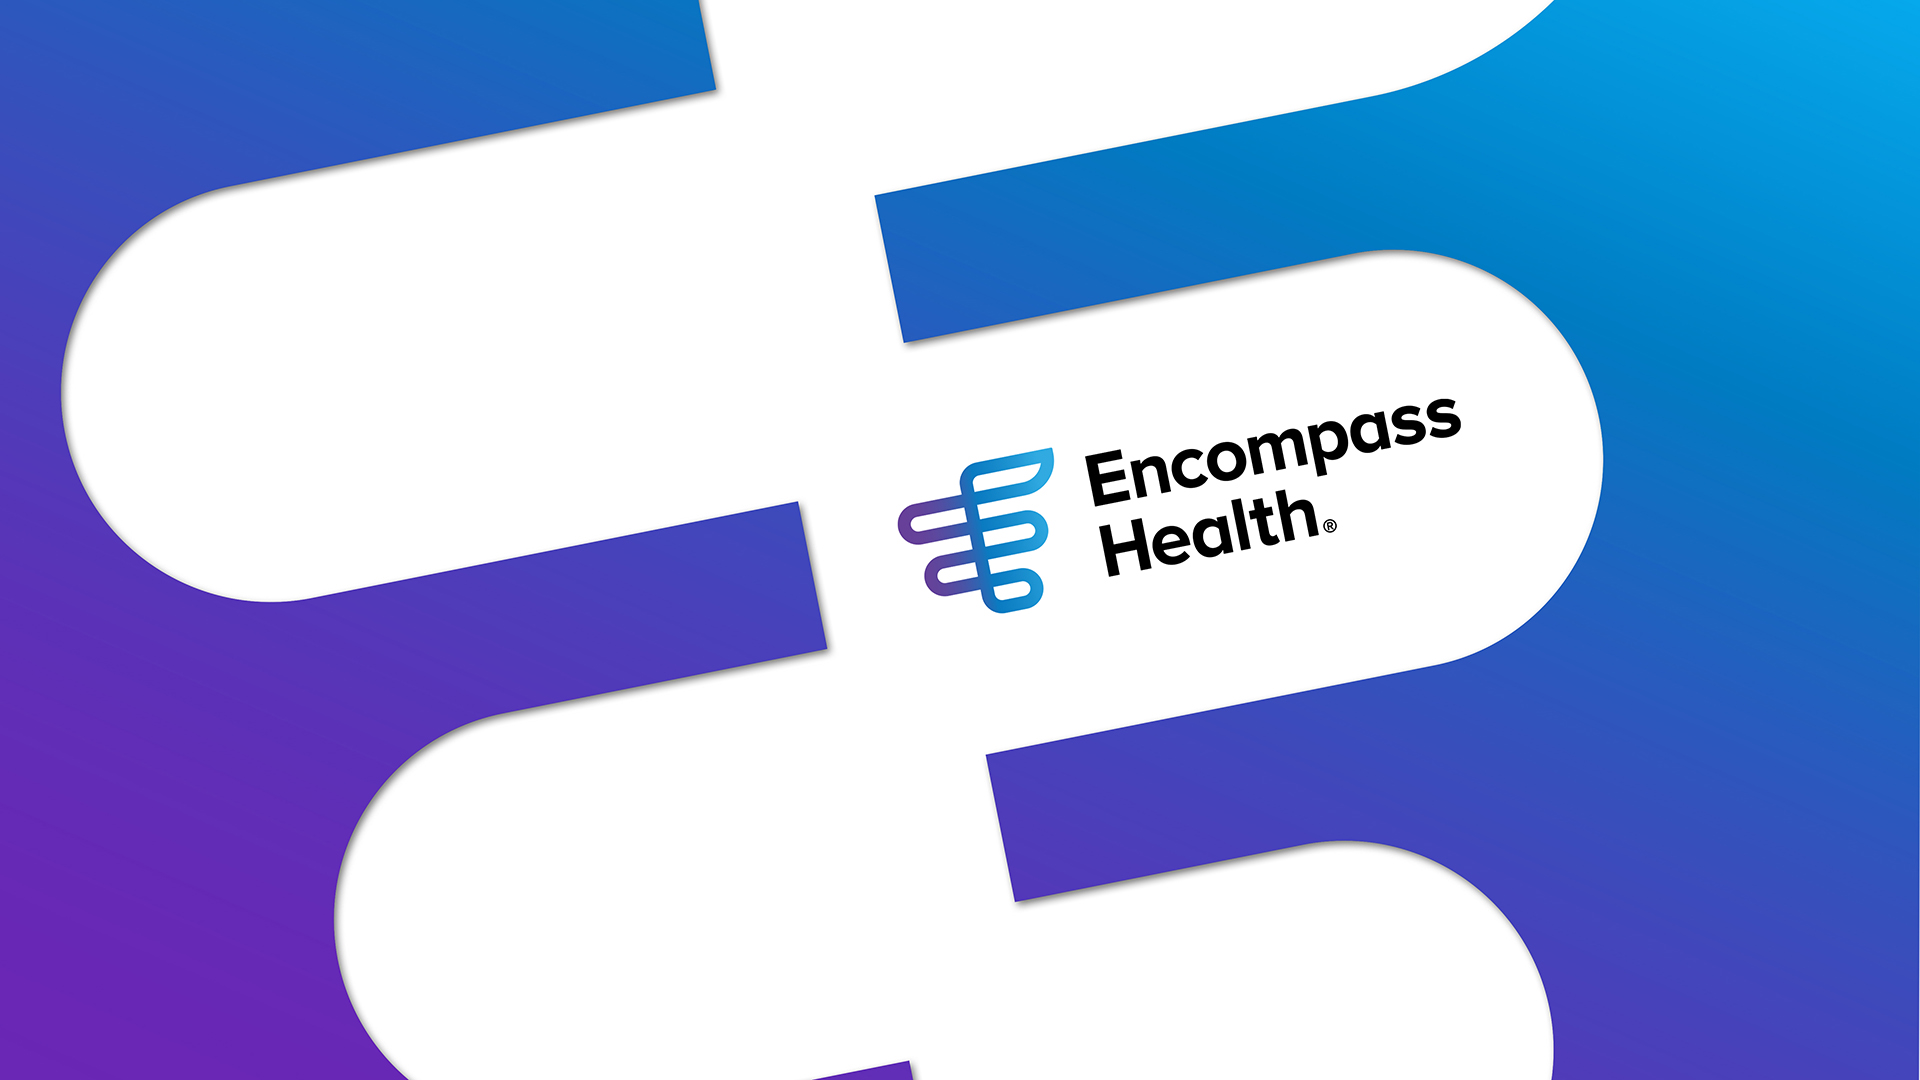 encompass health-jobs in health featured  1920x1080.jpg